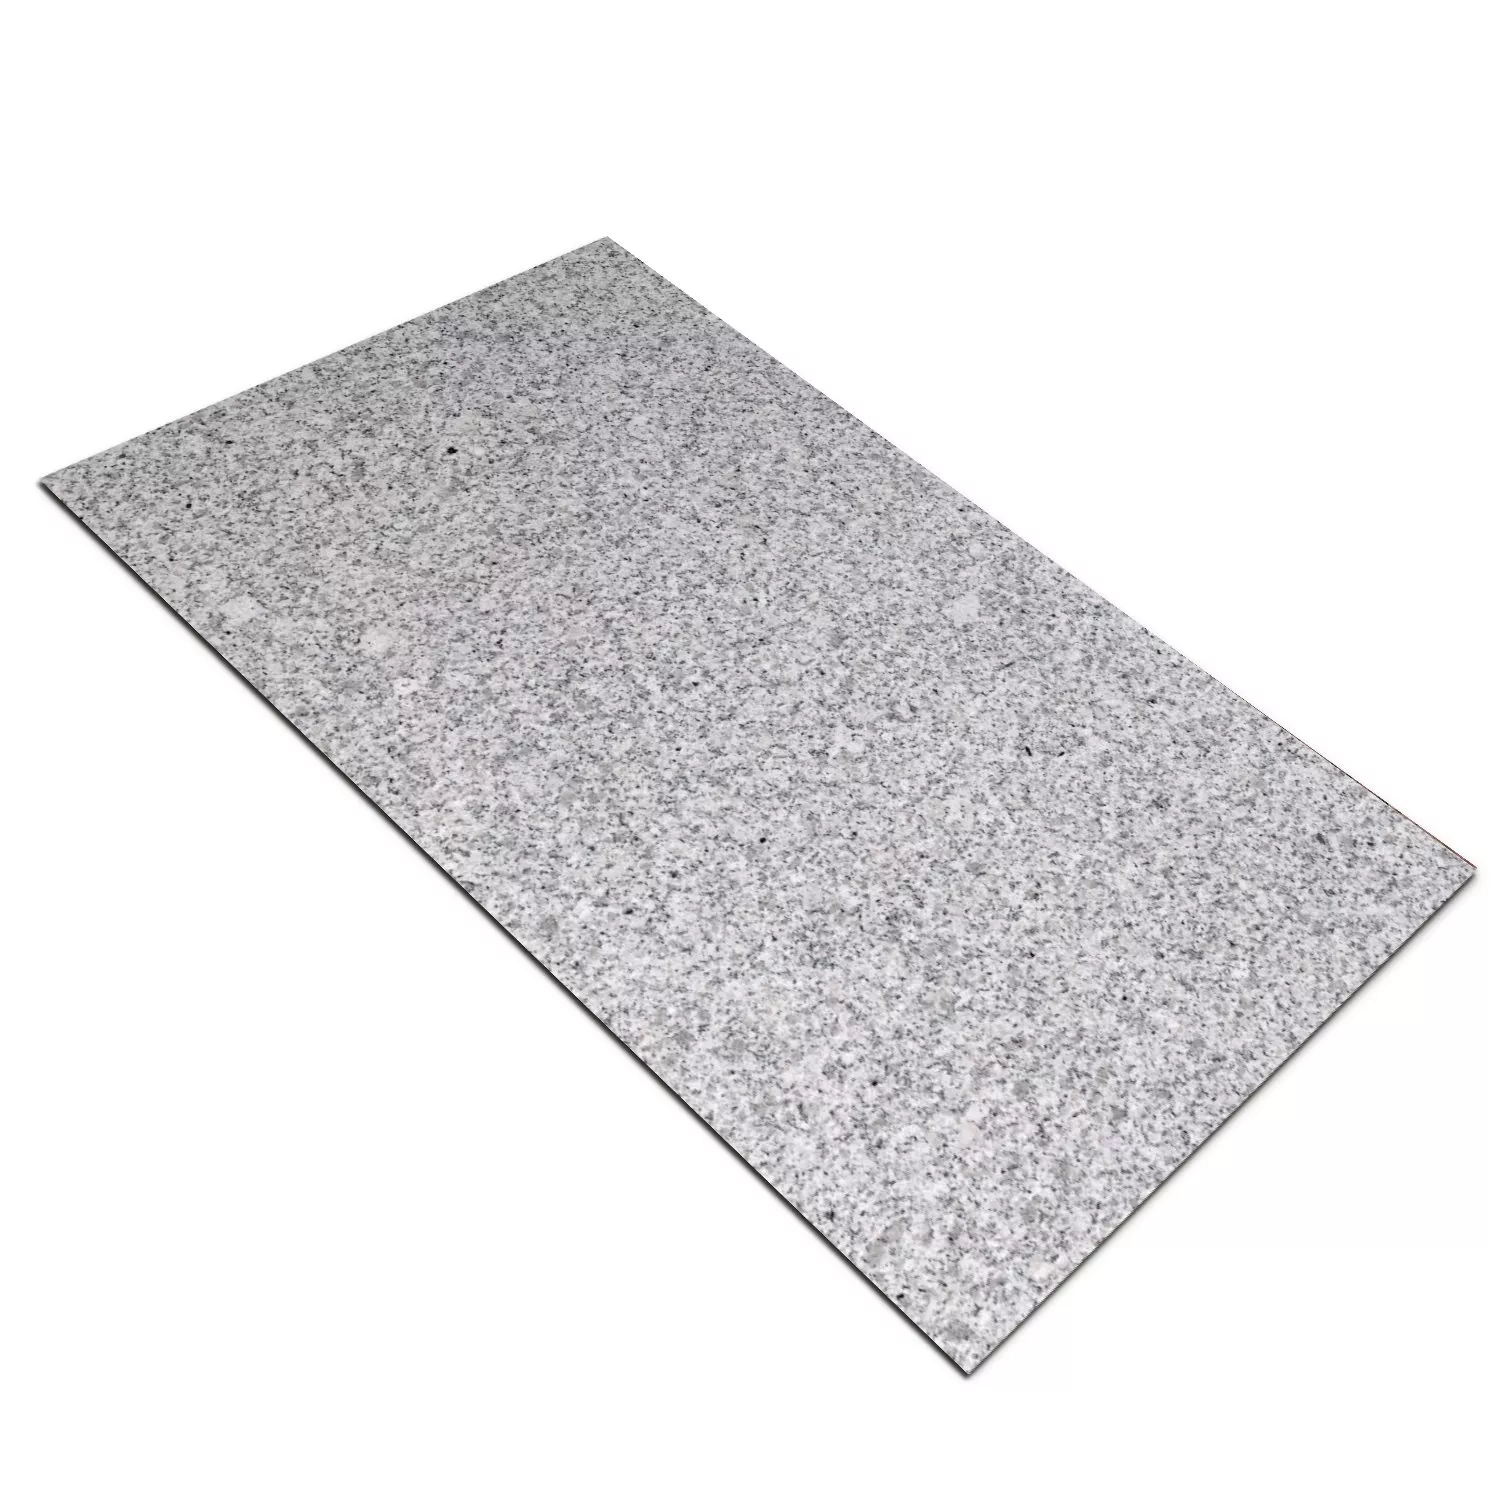 Natural Stone Tiles Granite China Grey Flamed 30,5x61cm